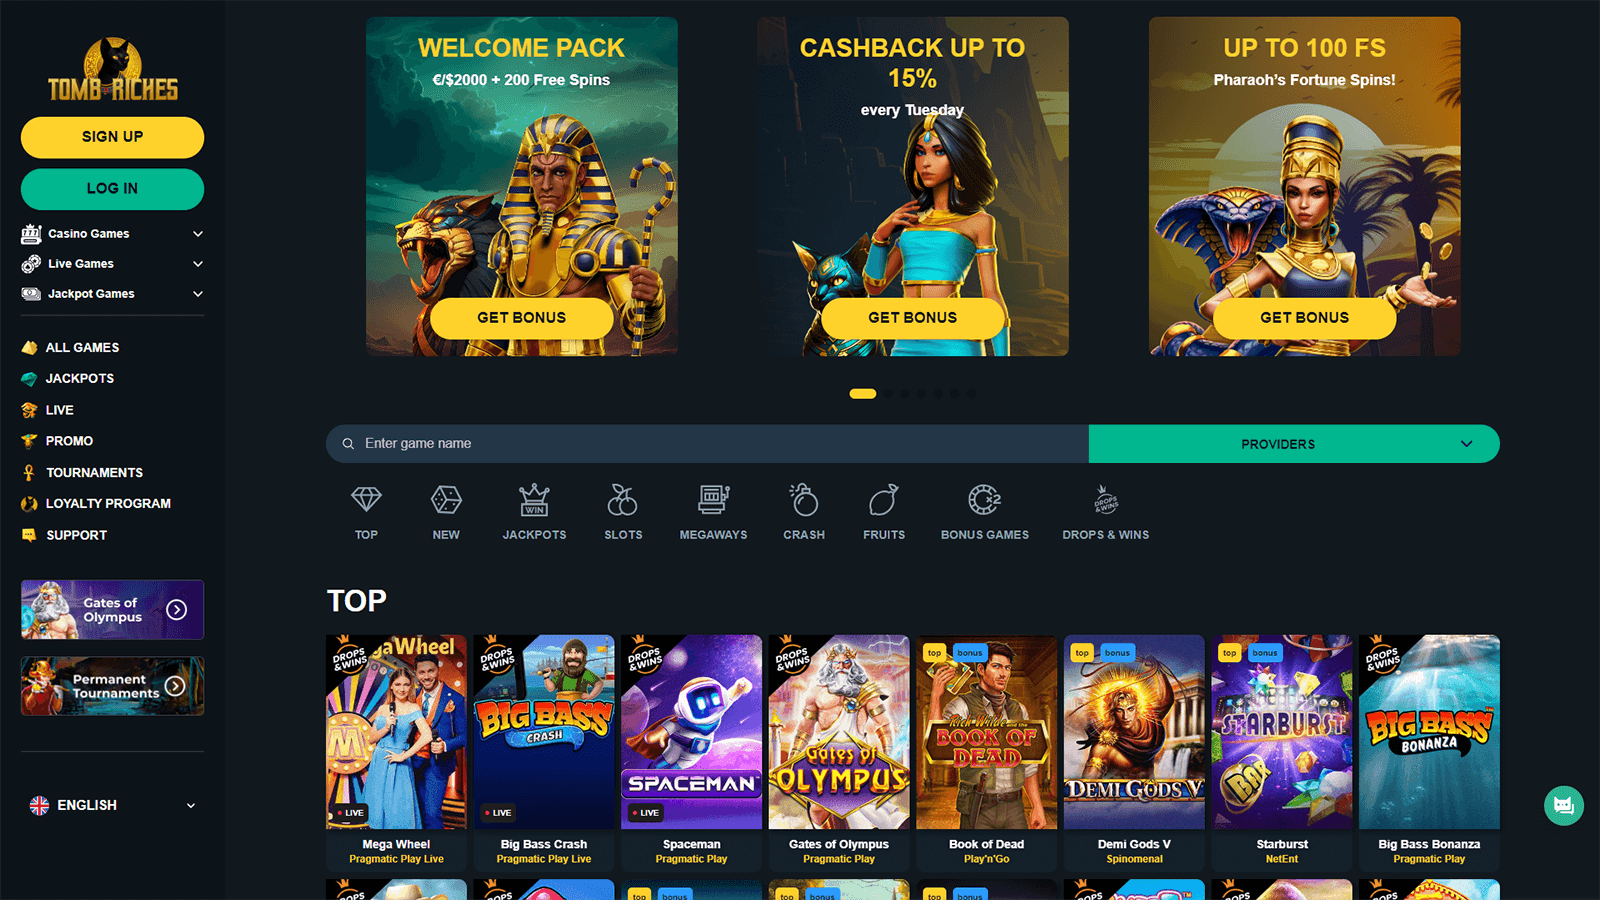 TOFCasino.com Tomb Riches Online Casino TOP